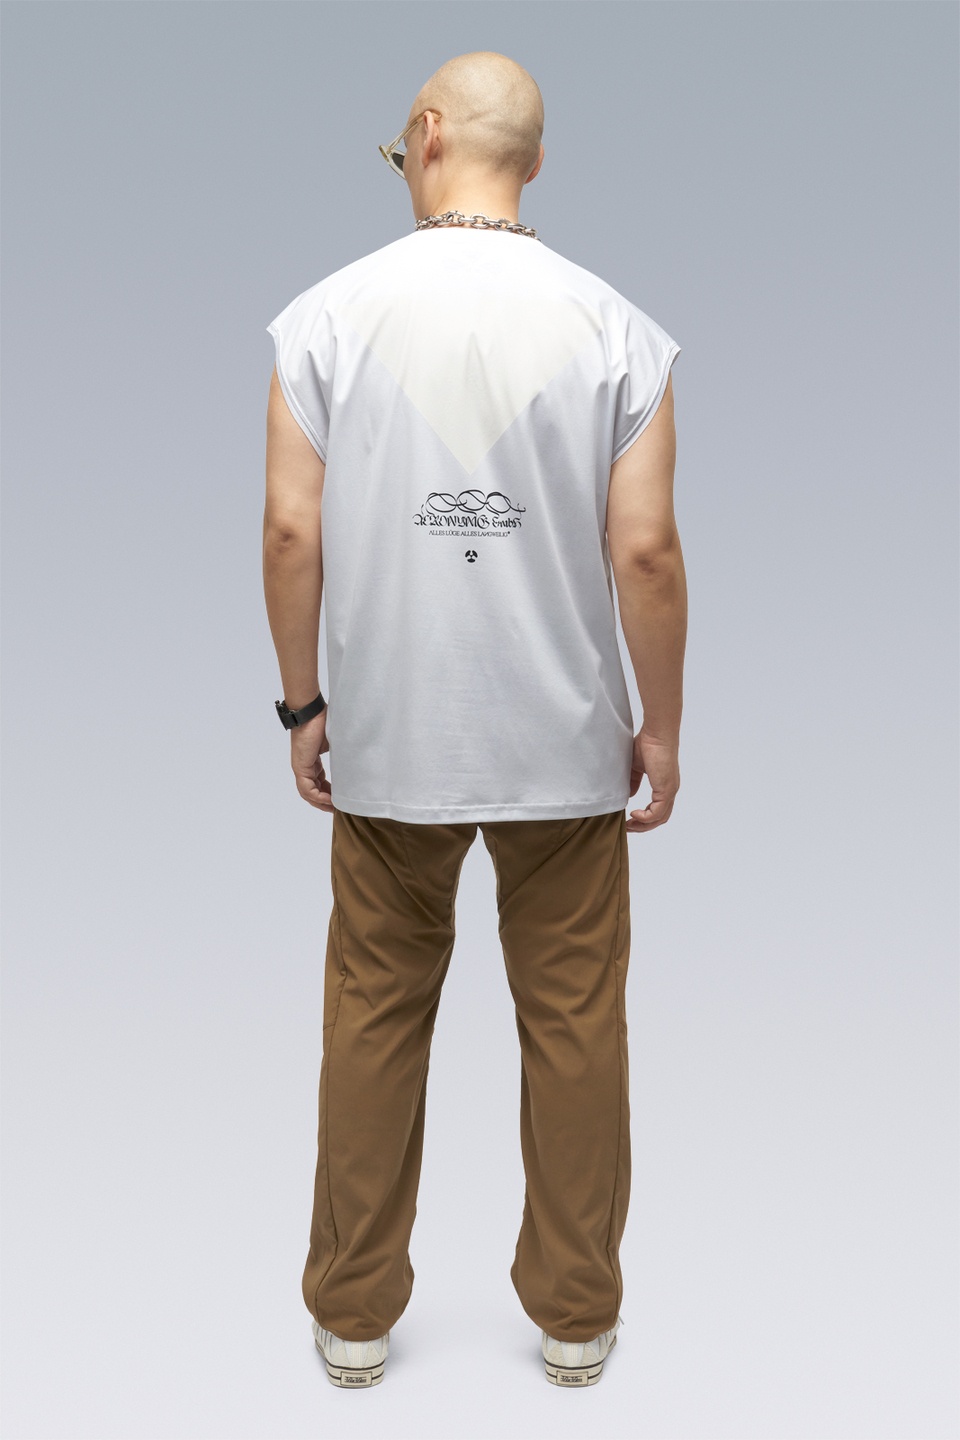 S25-PR-A 100% Cotton Mercerized Sleeveless T-shirt White - 2